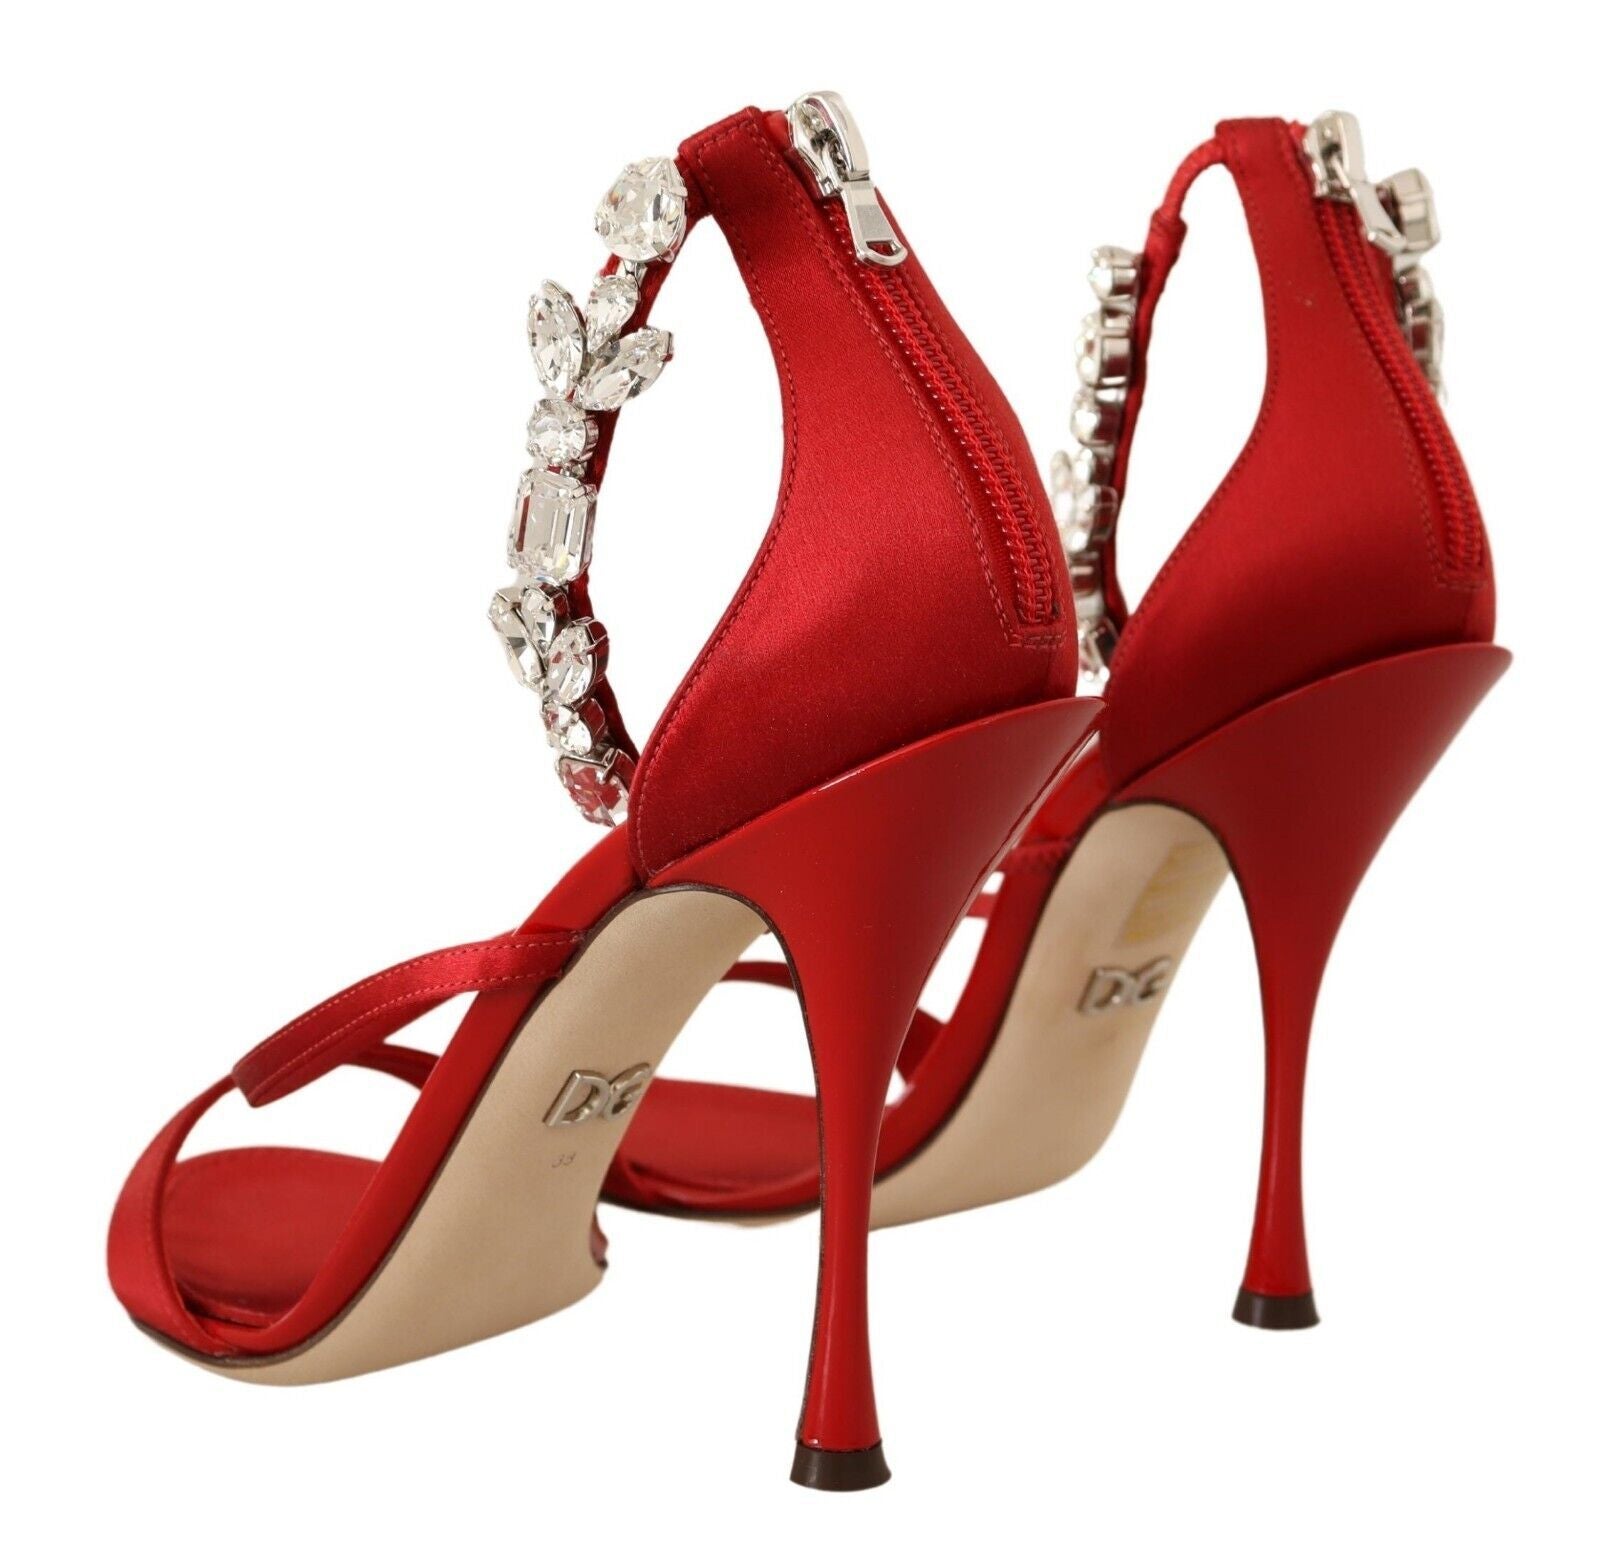 Fashionsarah.com Fashionsarah.com Dolce & Gabbana Red Satin Crystals Sandals Keira Heels Shoes